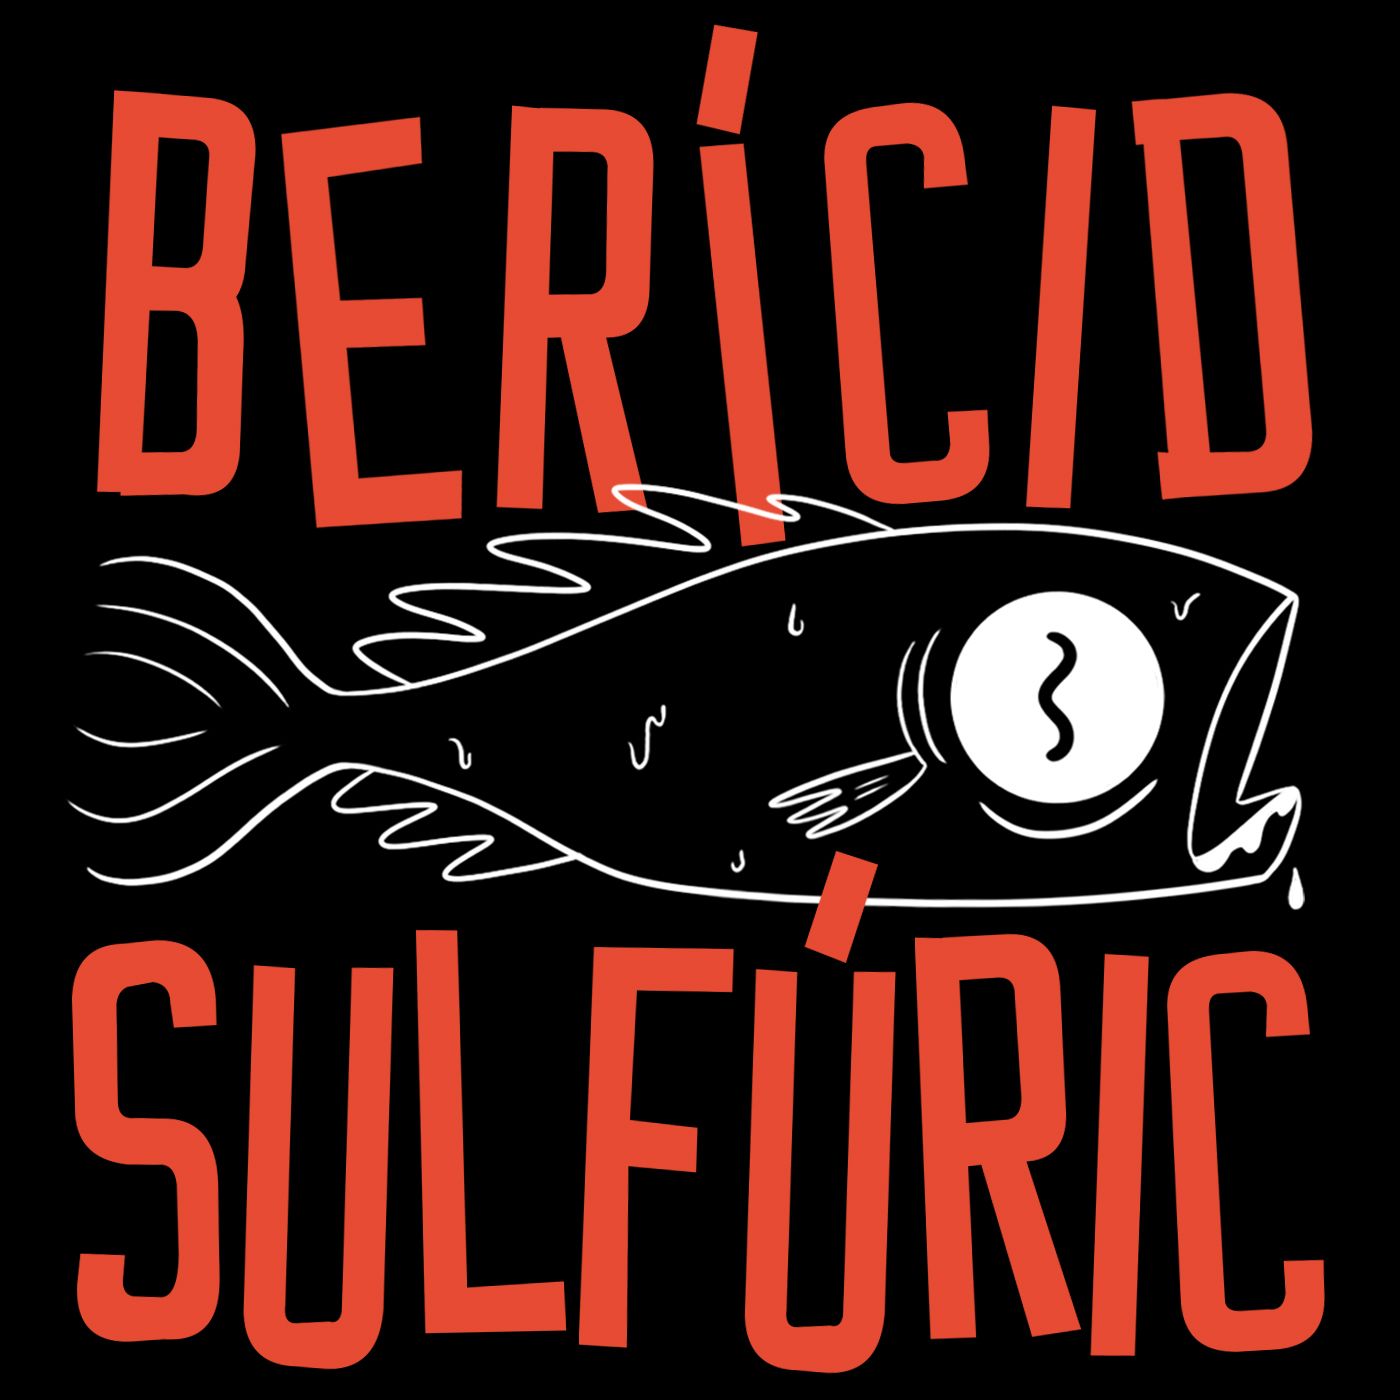 Berícid Sulfúric